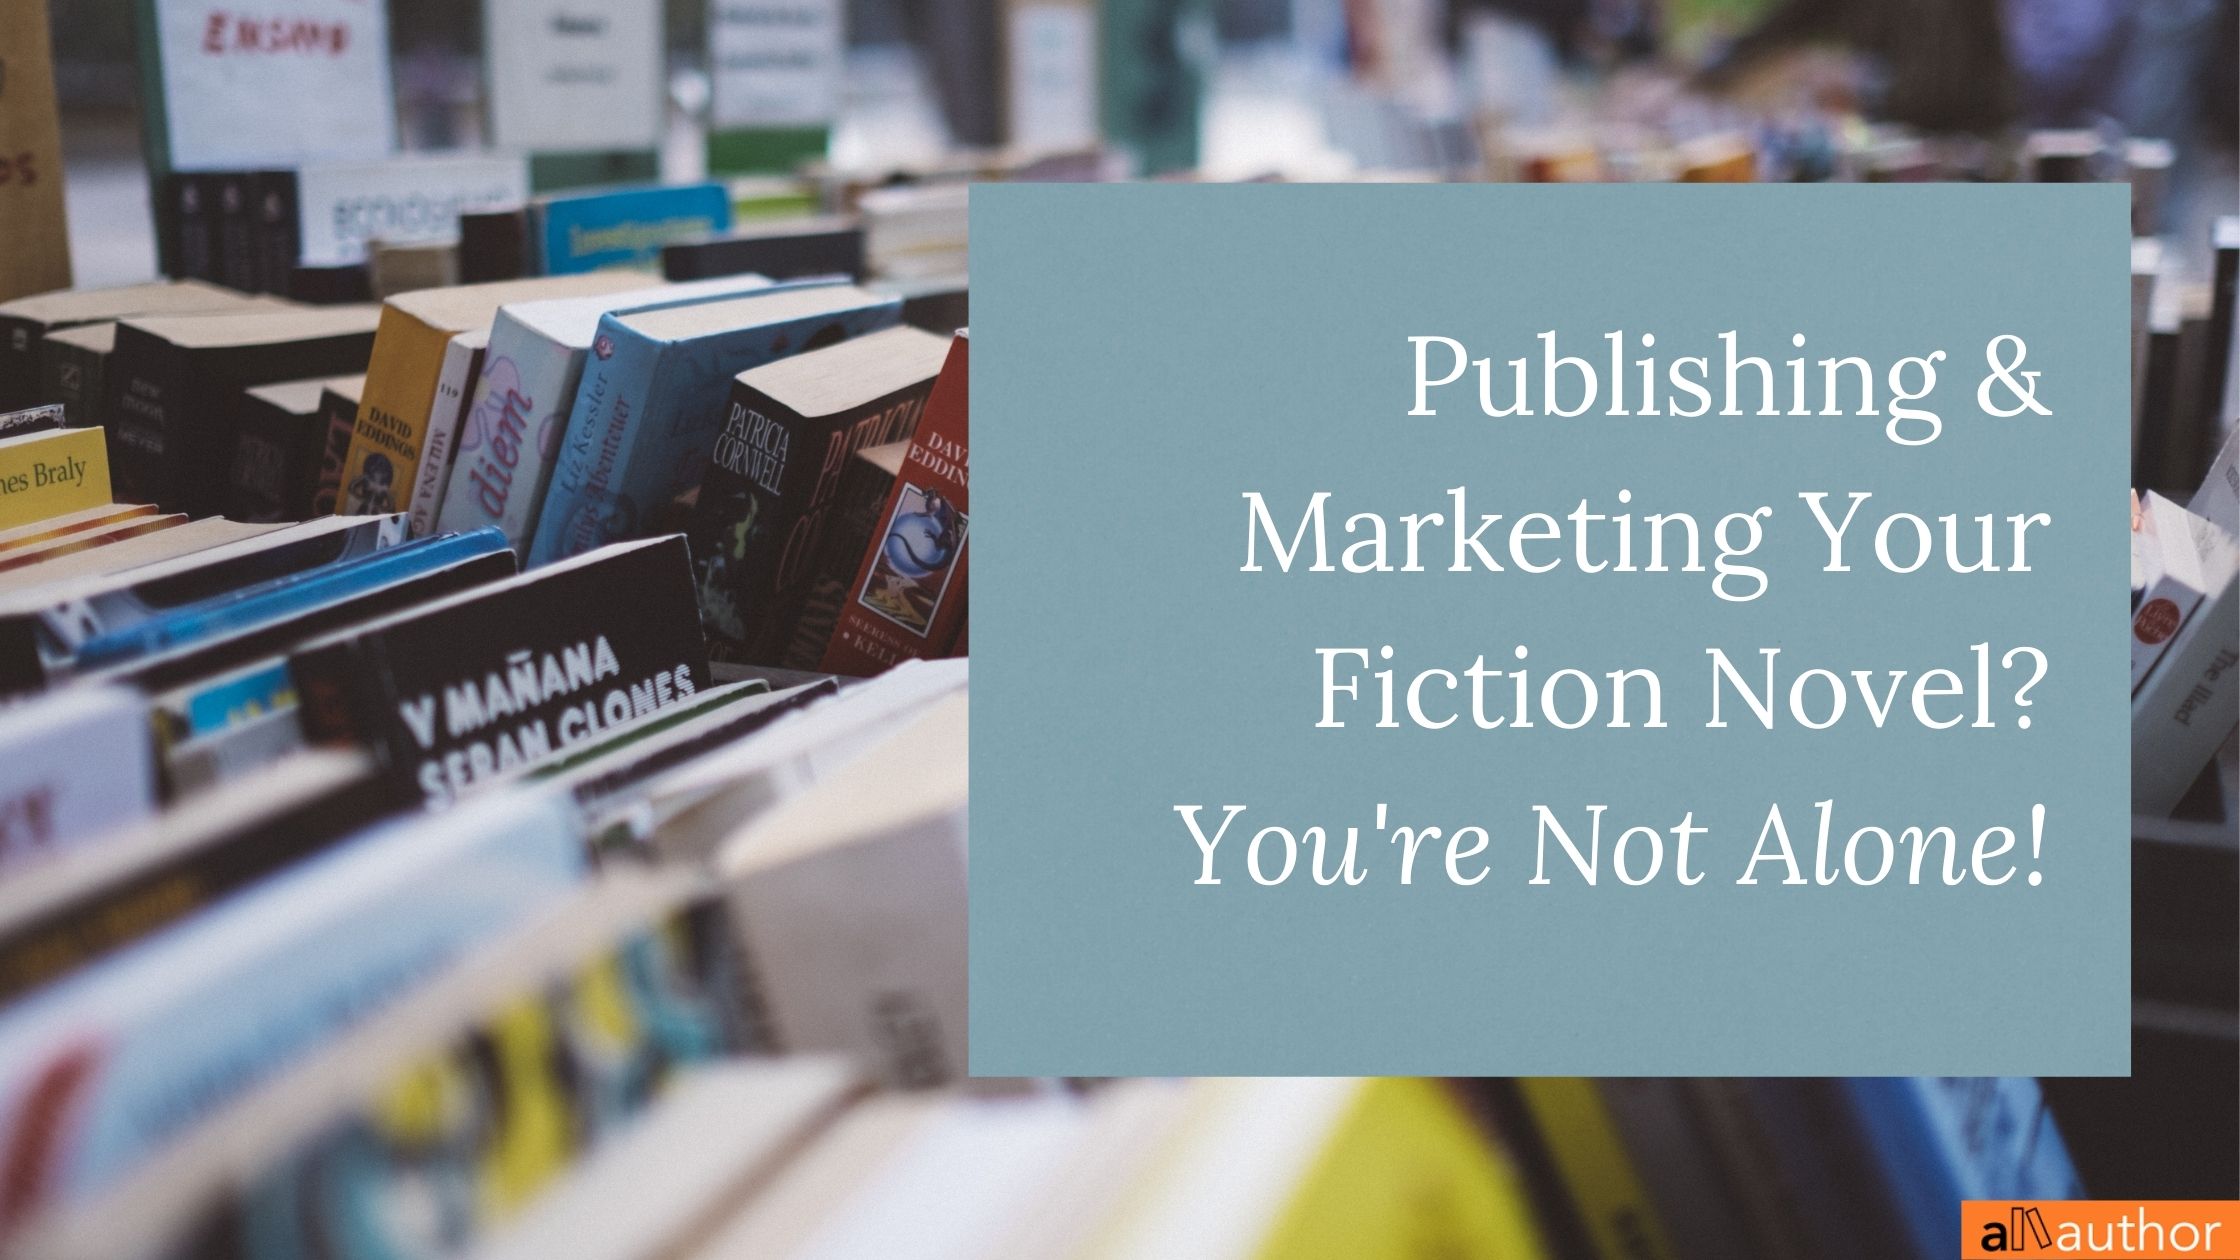 Publishing & Marketing Your Fiction Novel? You're Not Alone!